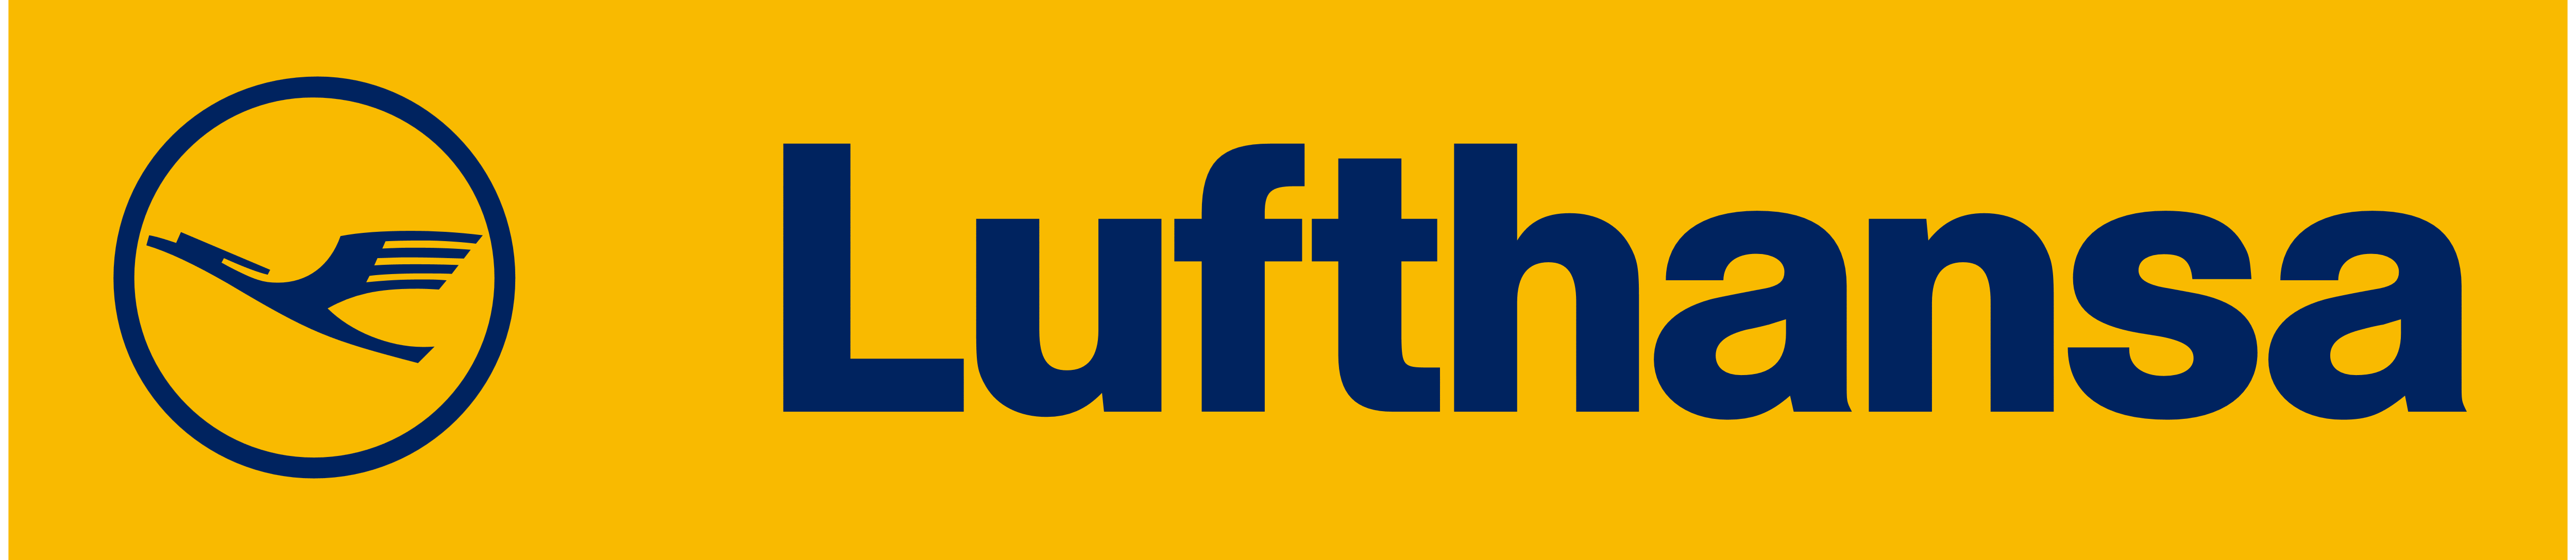 Lufthansa – Logos Download - Lufthansa, Transparent background PNG HD thumbnail